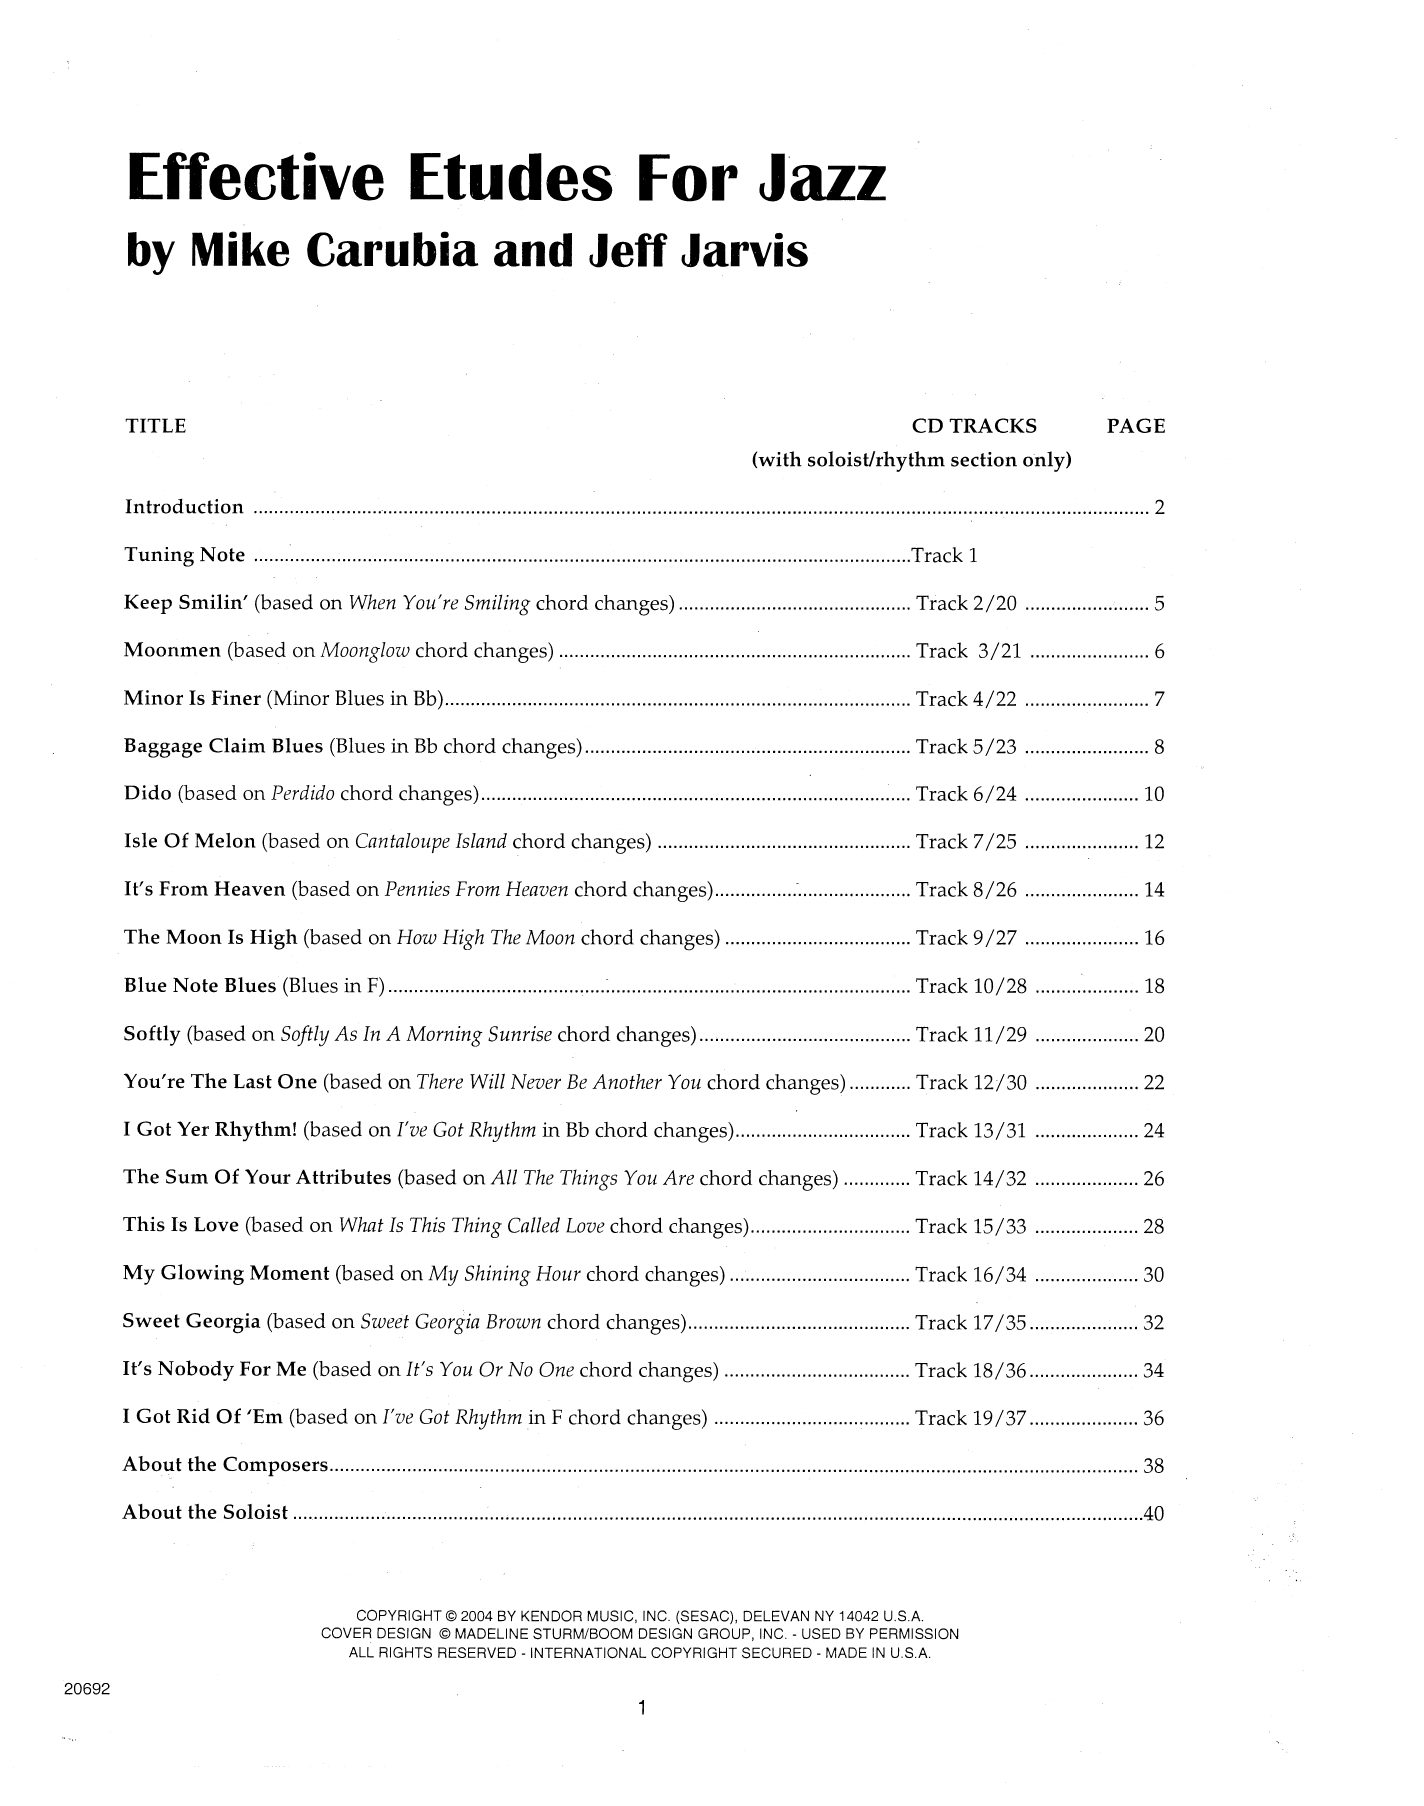 Download Jeff Jarvis Effective Etudes For Jazz - Eb Alto Sax Sheet Music